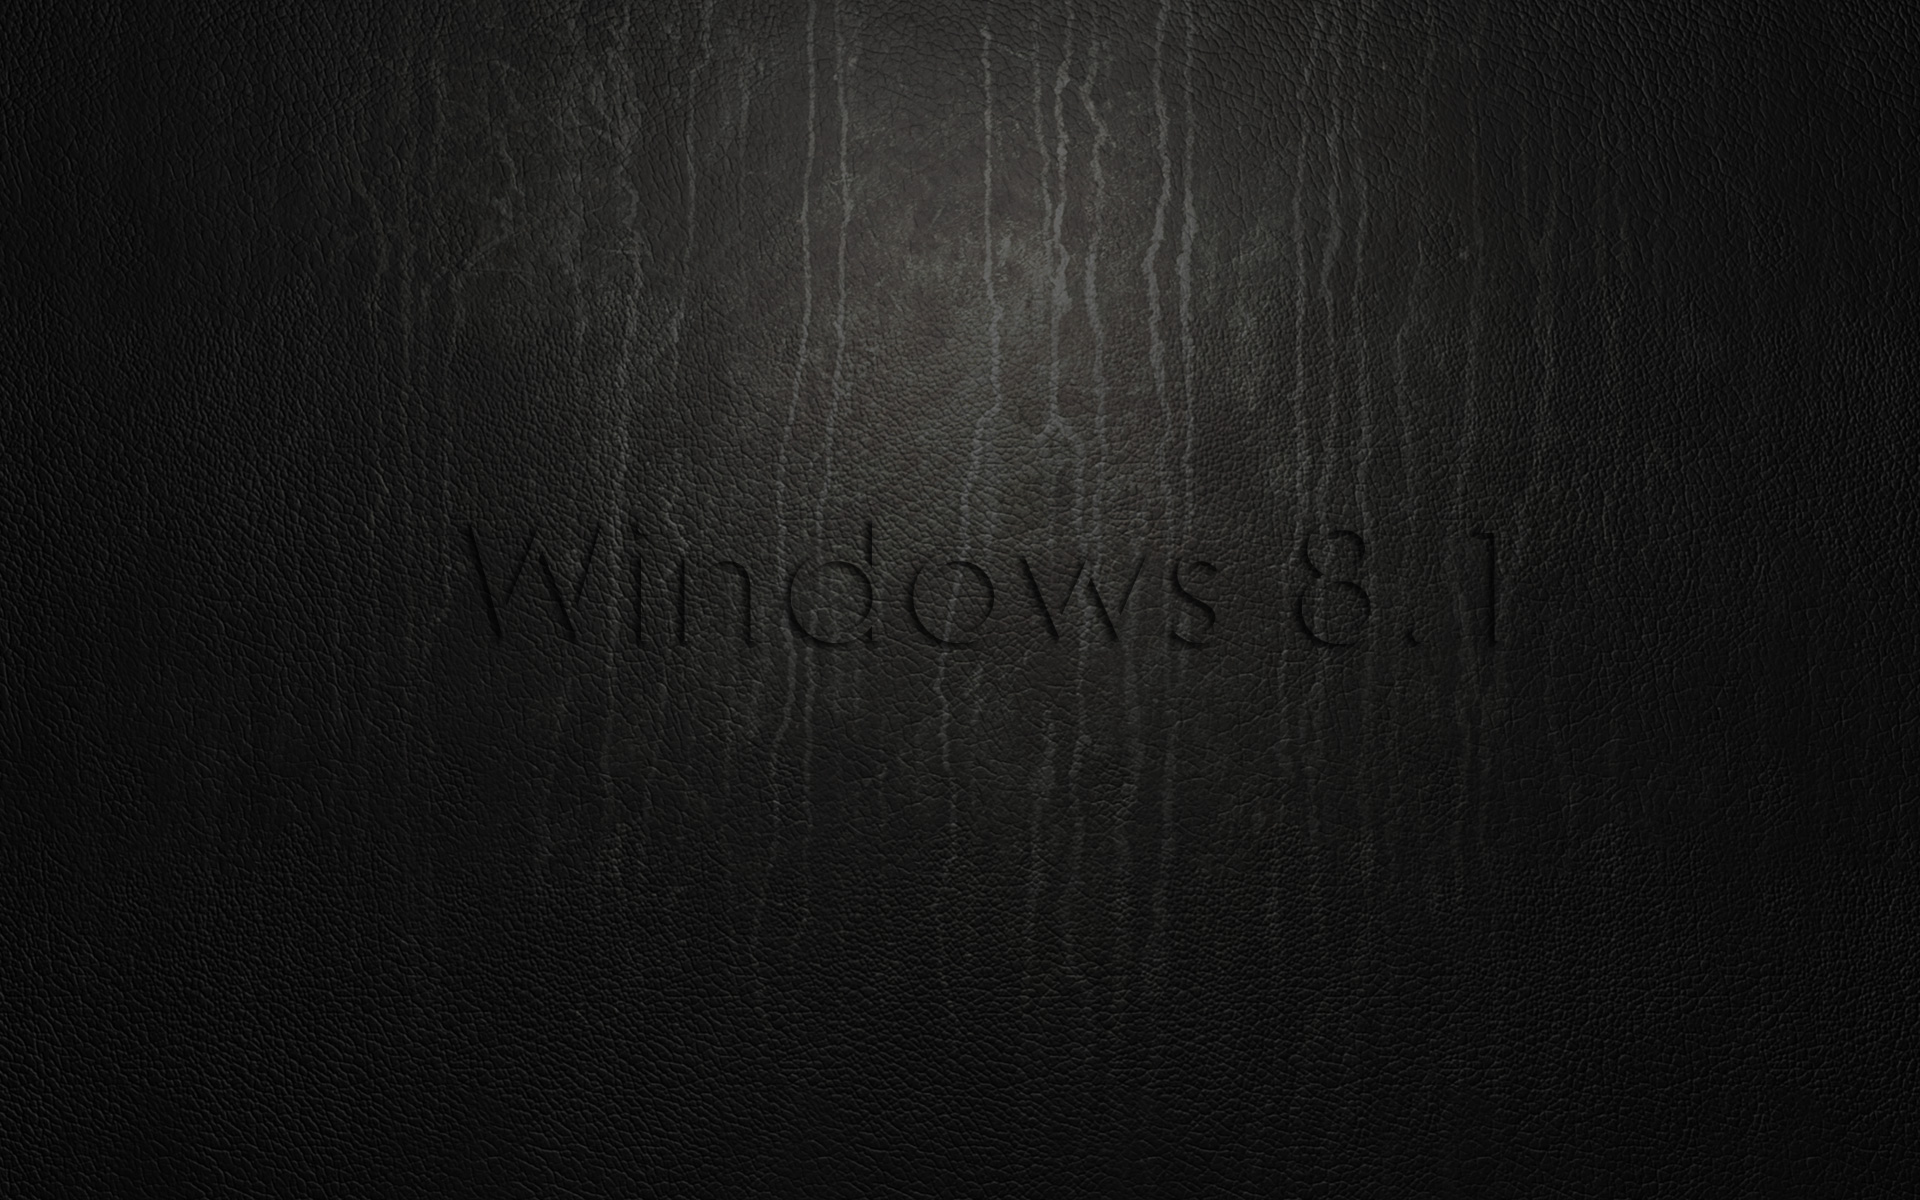 Black Windows 8.1 Wallpaper - MixHD wallpapers